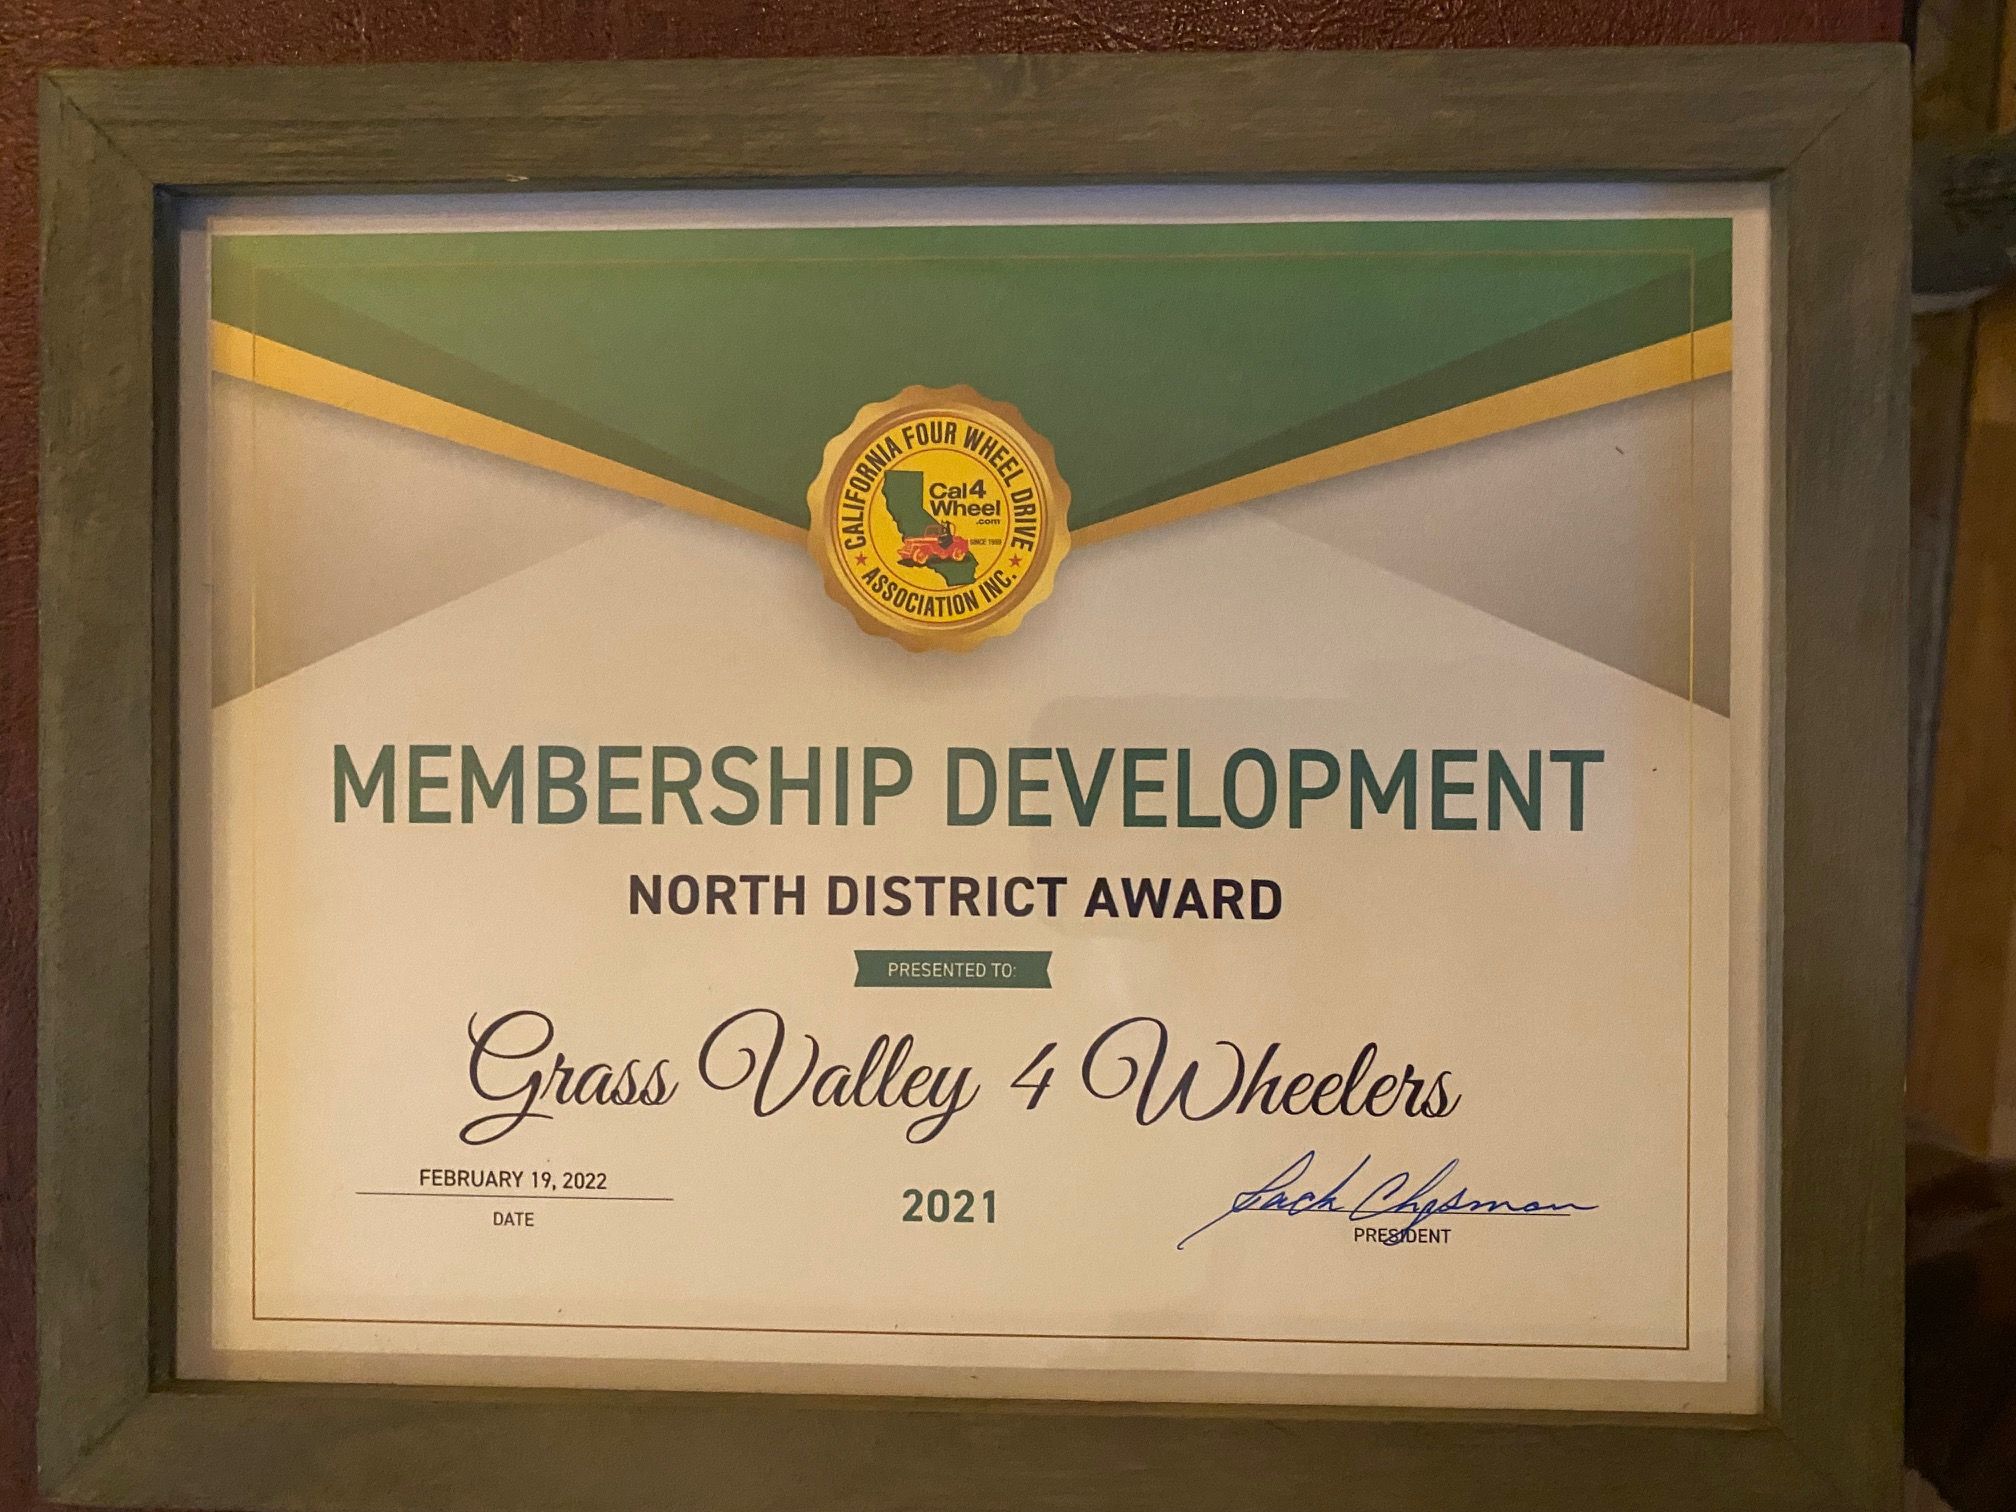 Membership Development - North District Award